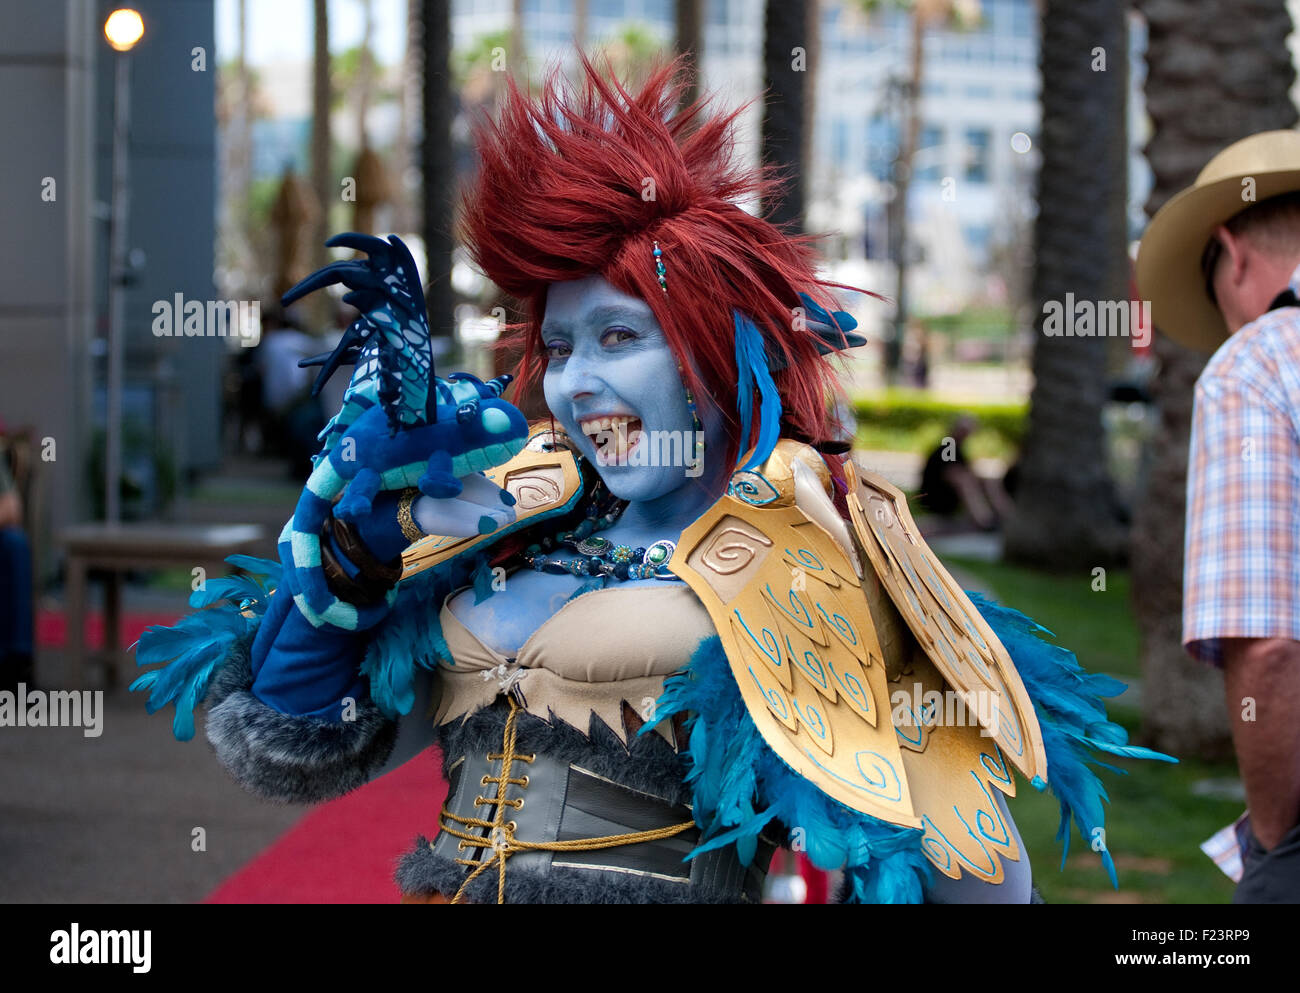 San Diego Comic-Con International 2015 - Atmosphere  Featuring: Atmosphere Where: San Diego, California, United States When: 10 Jul 2015 Stock Photo